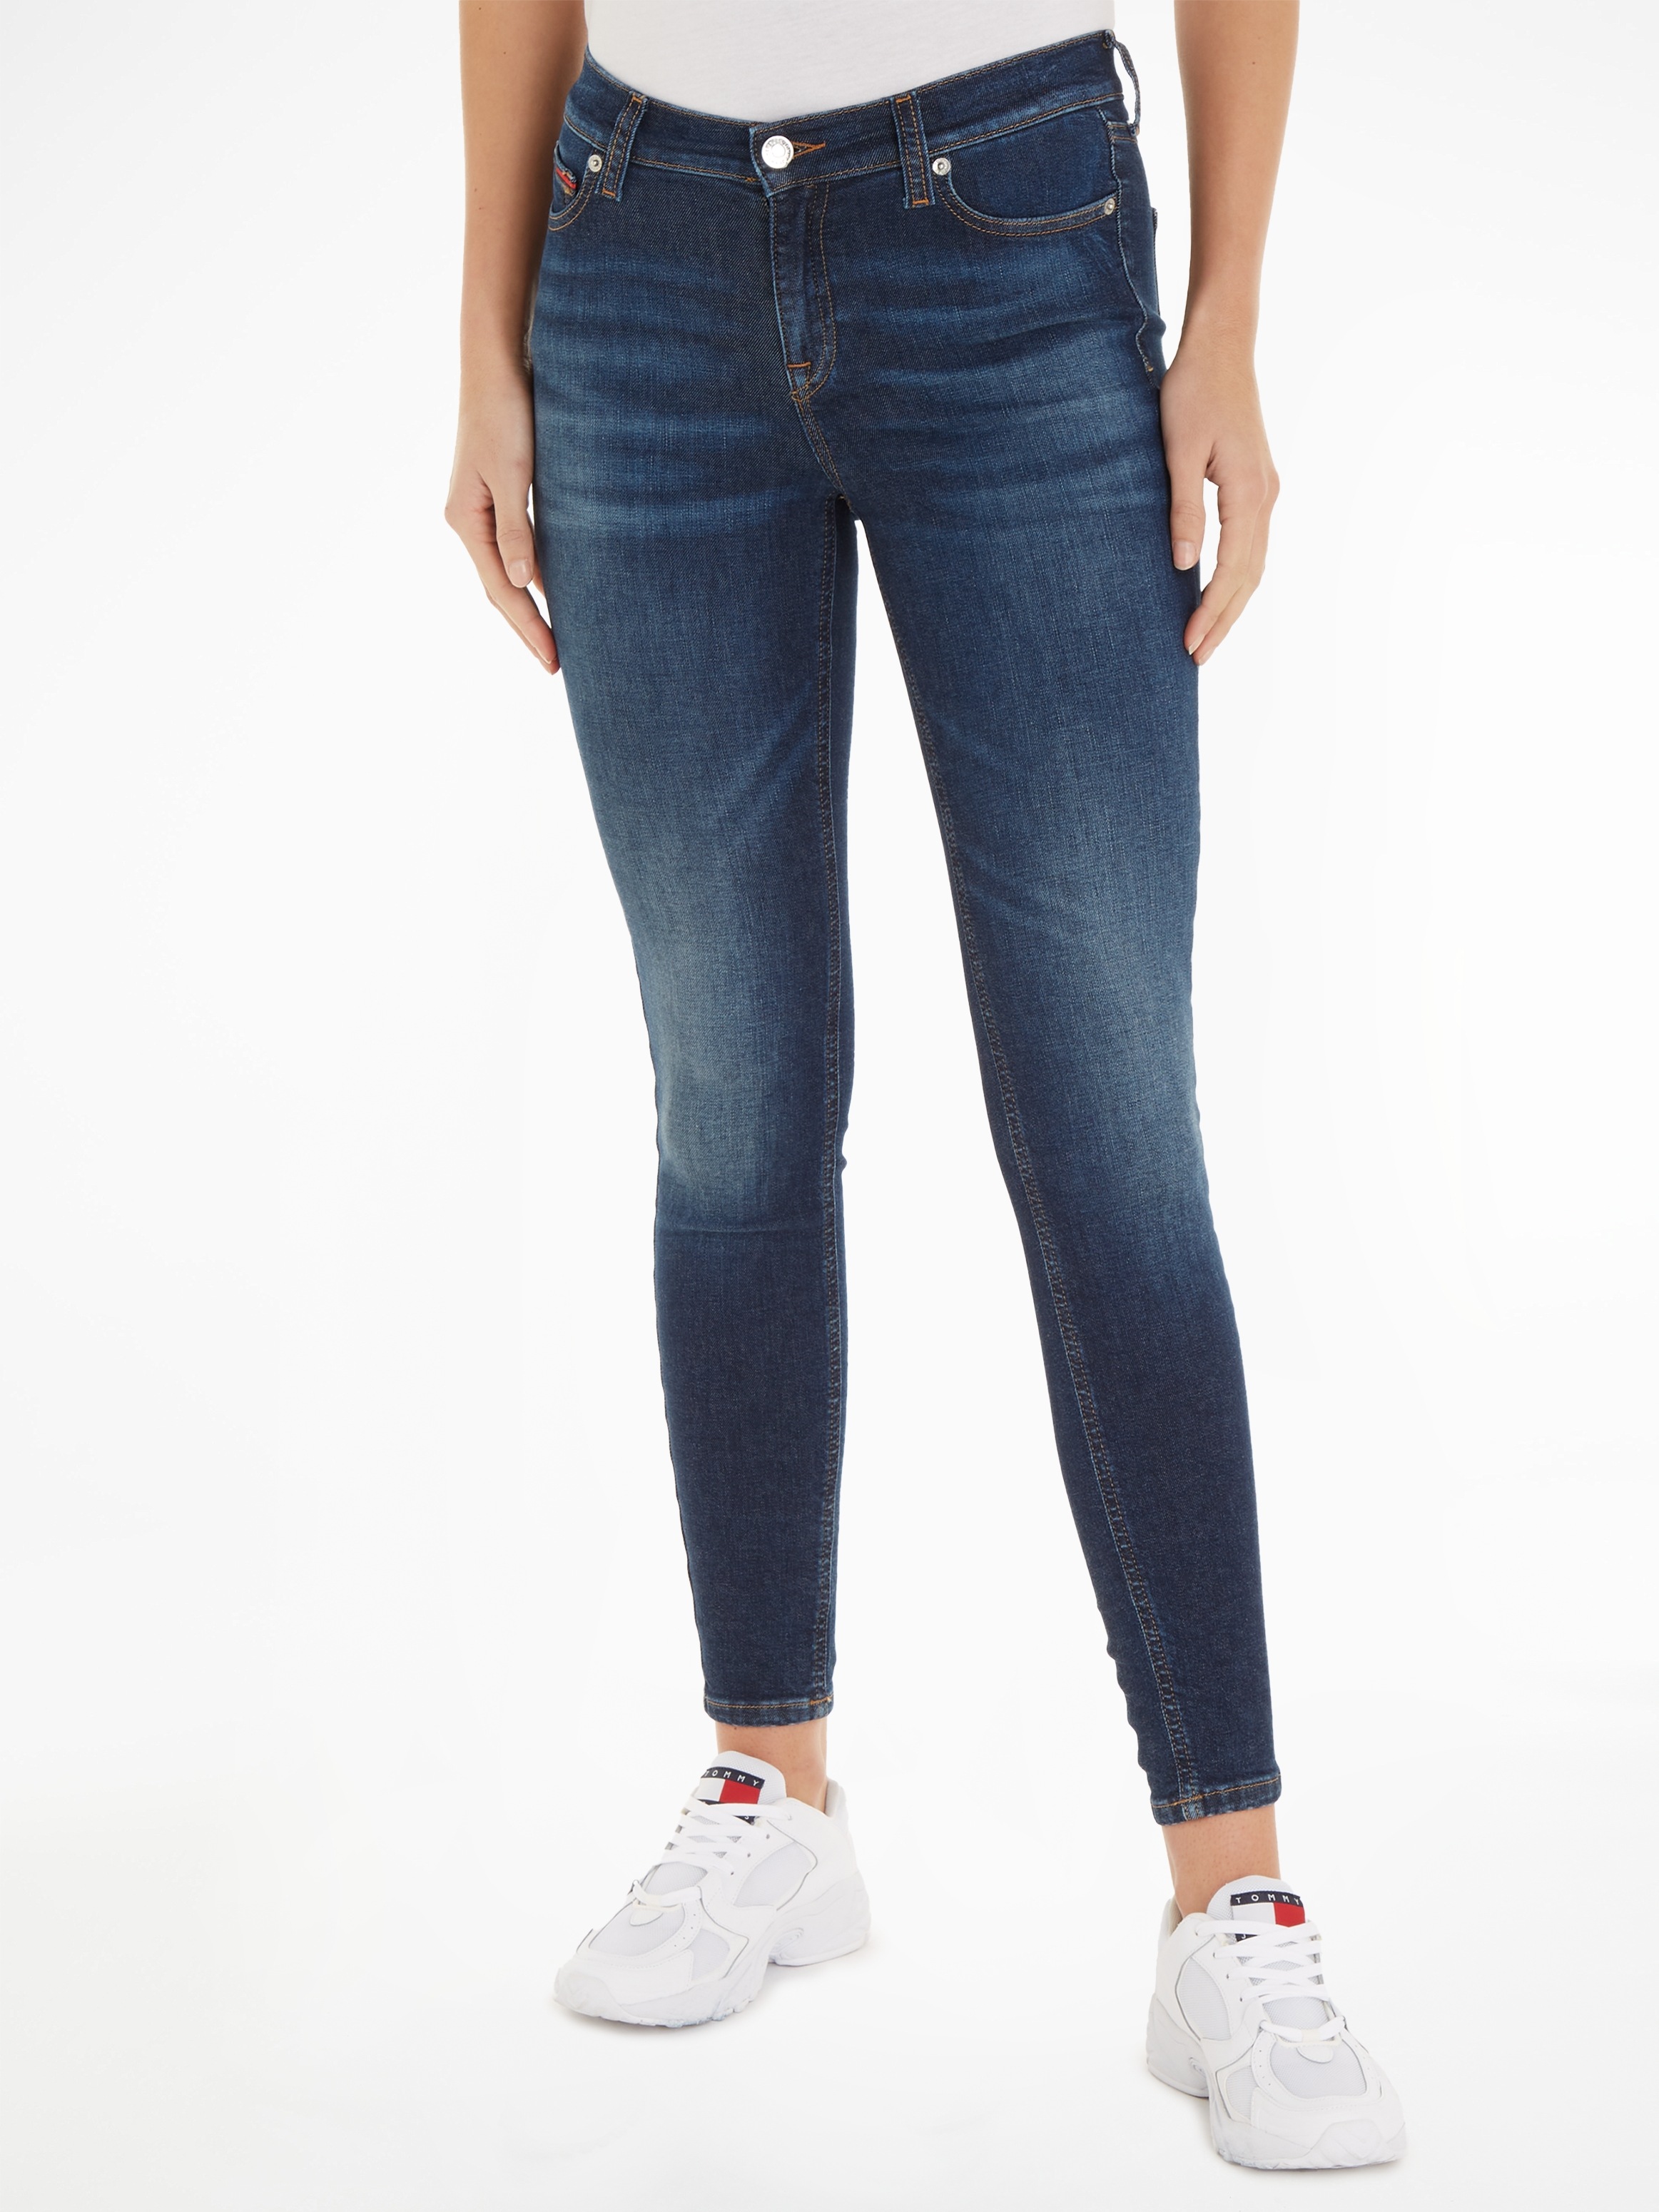 mit BAUR | Label-Applikationen Skinny-fit-Jeans, Jeans Tommy kaufen dezenten